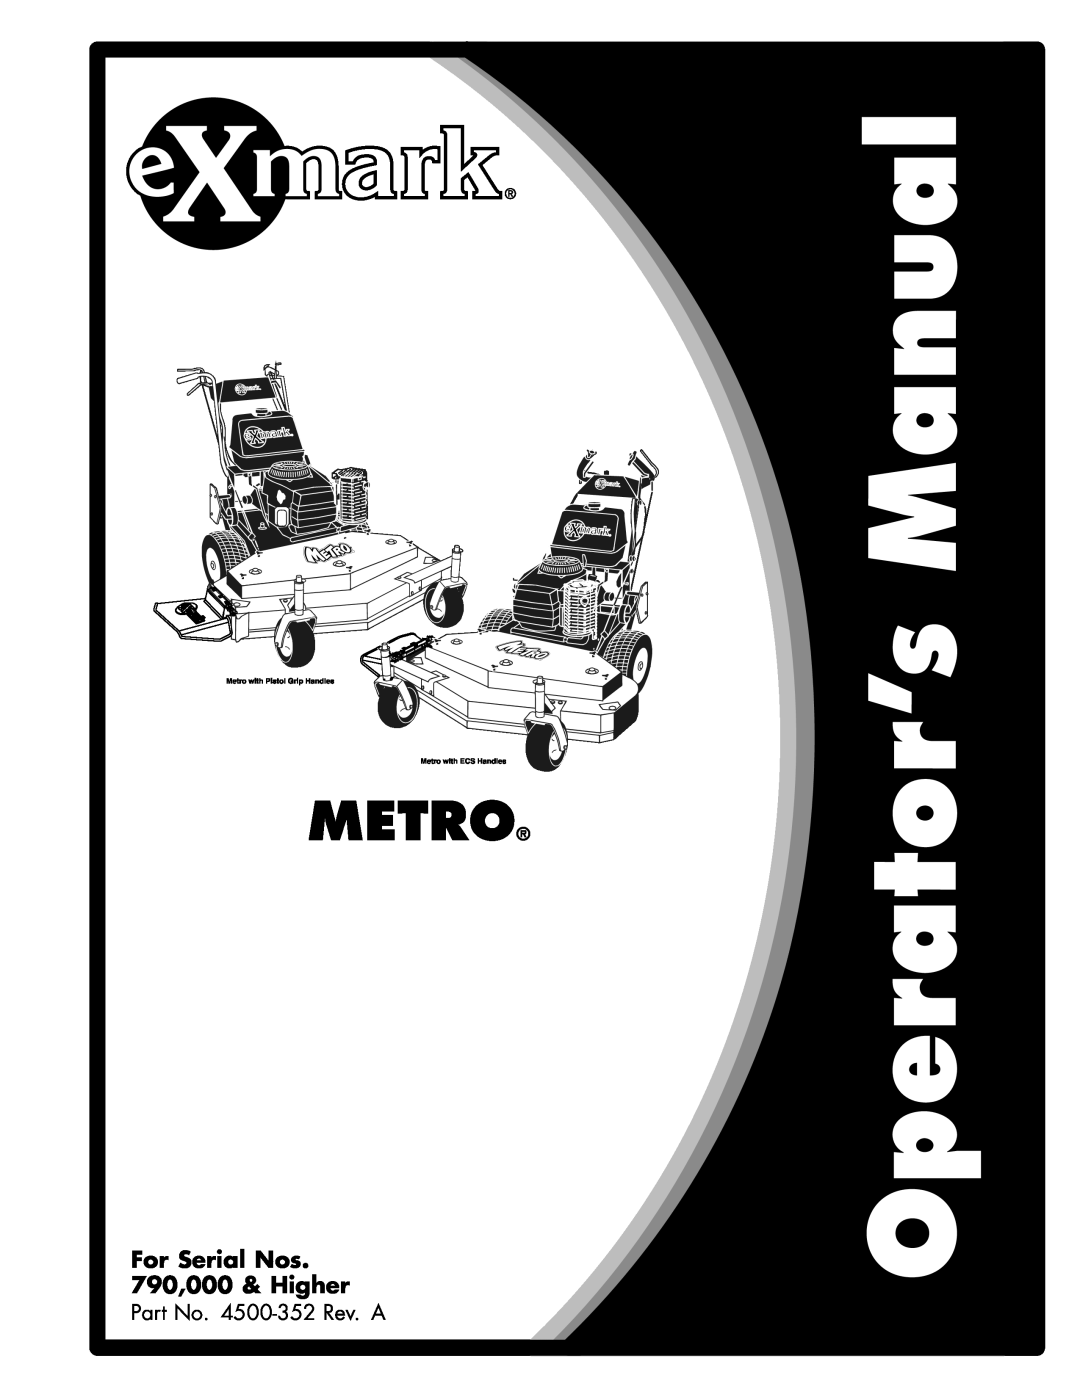 Exmark 4500-352 manual Metro, For Serial Nos 790,000 & Higher 